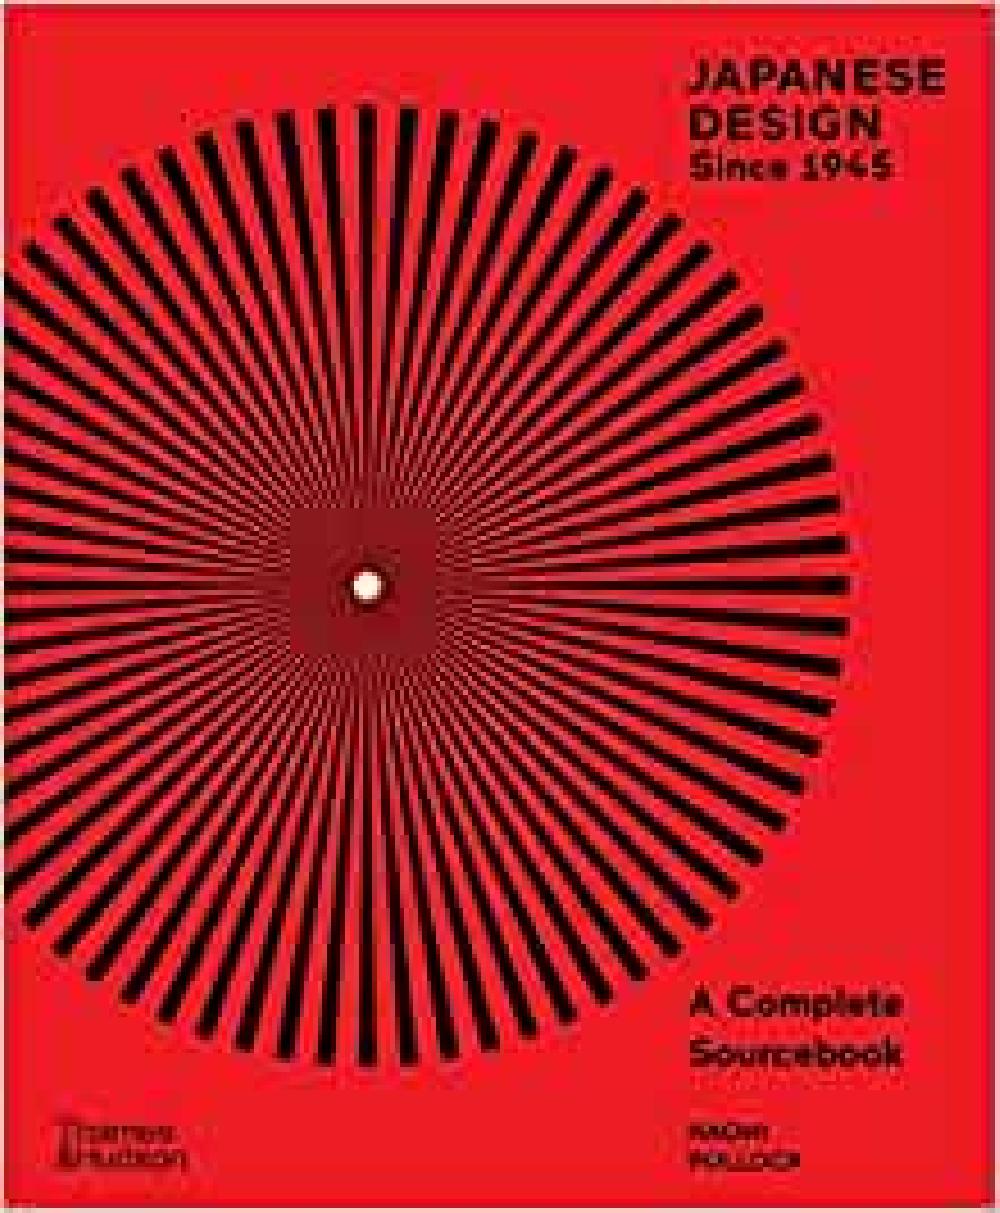 Japanese design since 1945 : A complete sourcebook - Naomi Pollock